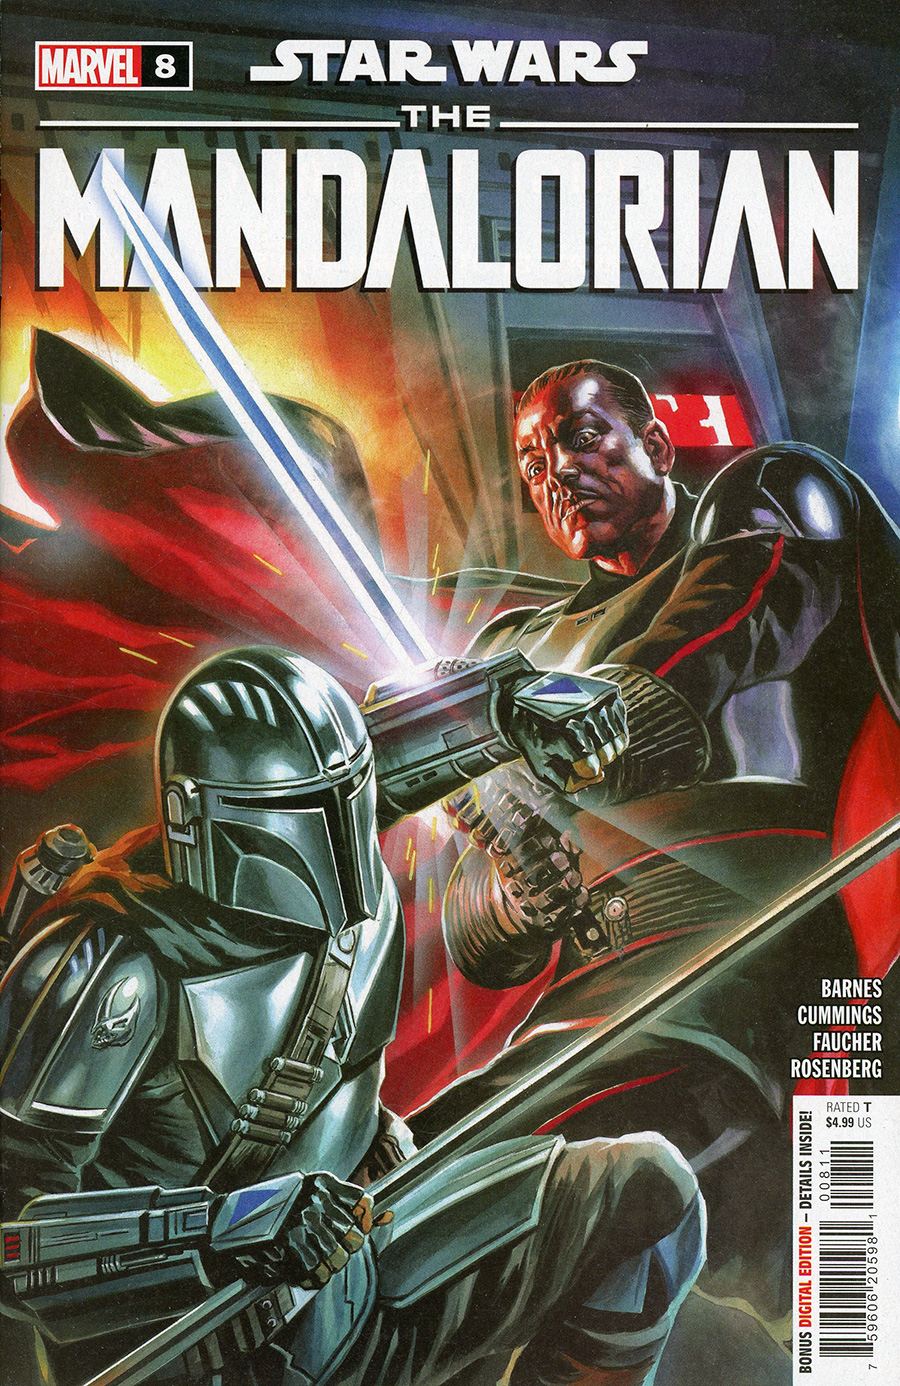 Star Wars The Mandalorian Season 2 #8 Cover A Regular Felipe Massafera Cover